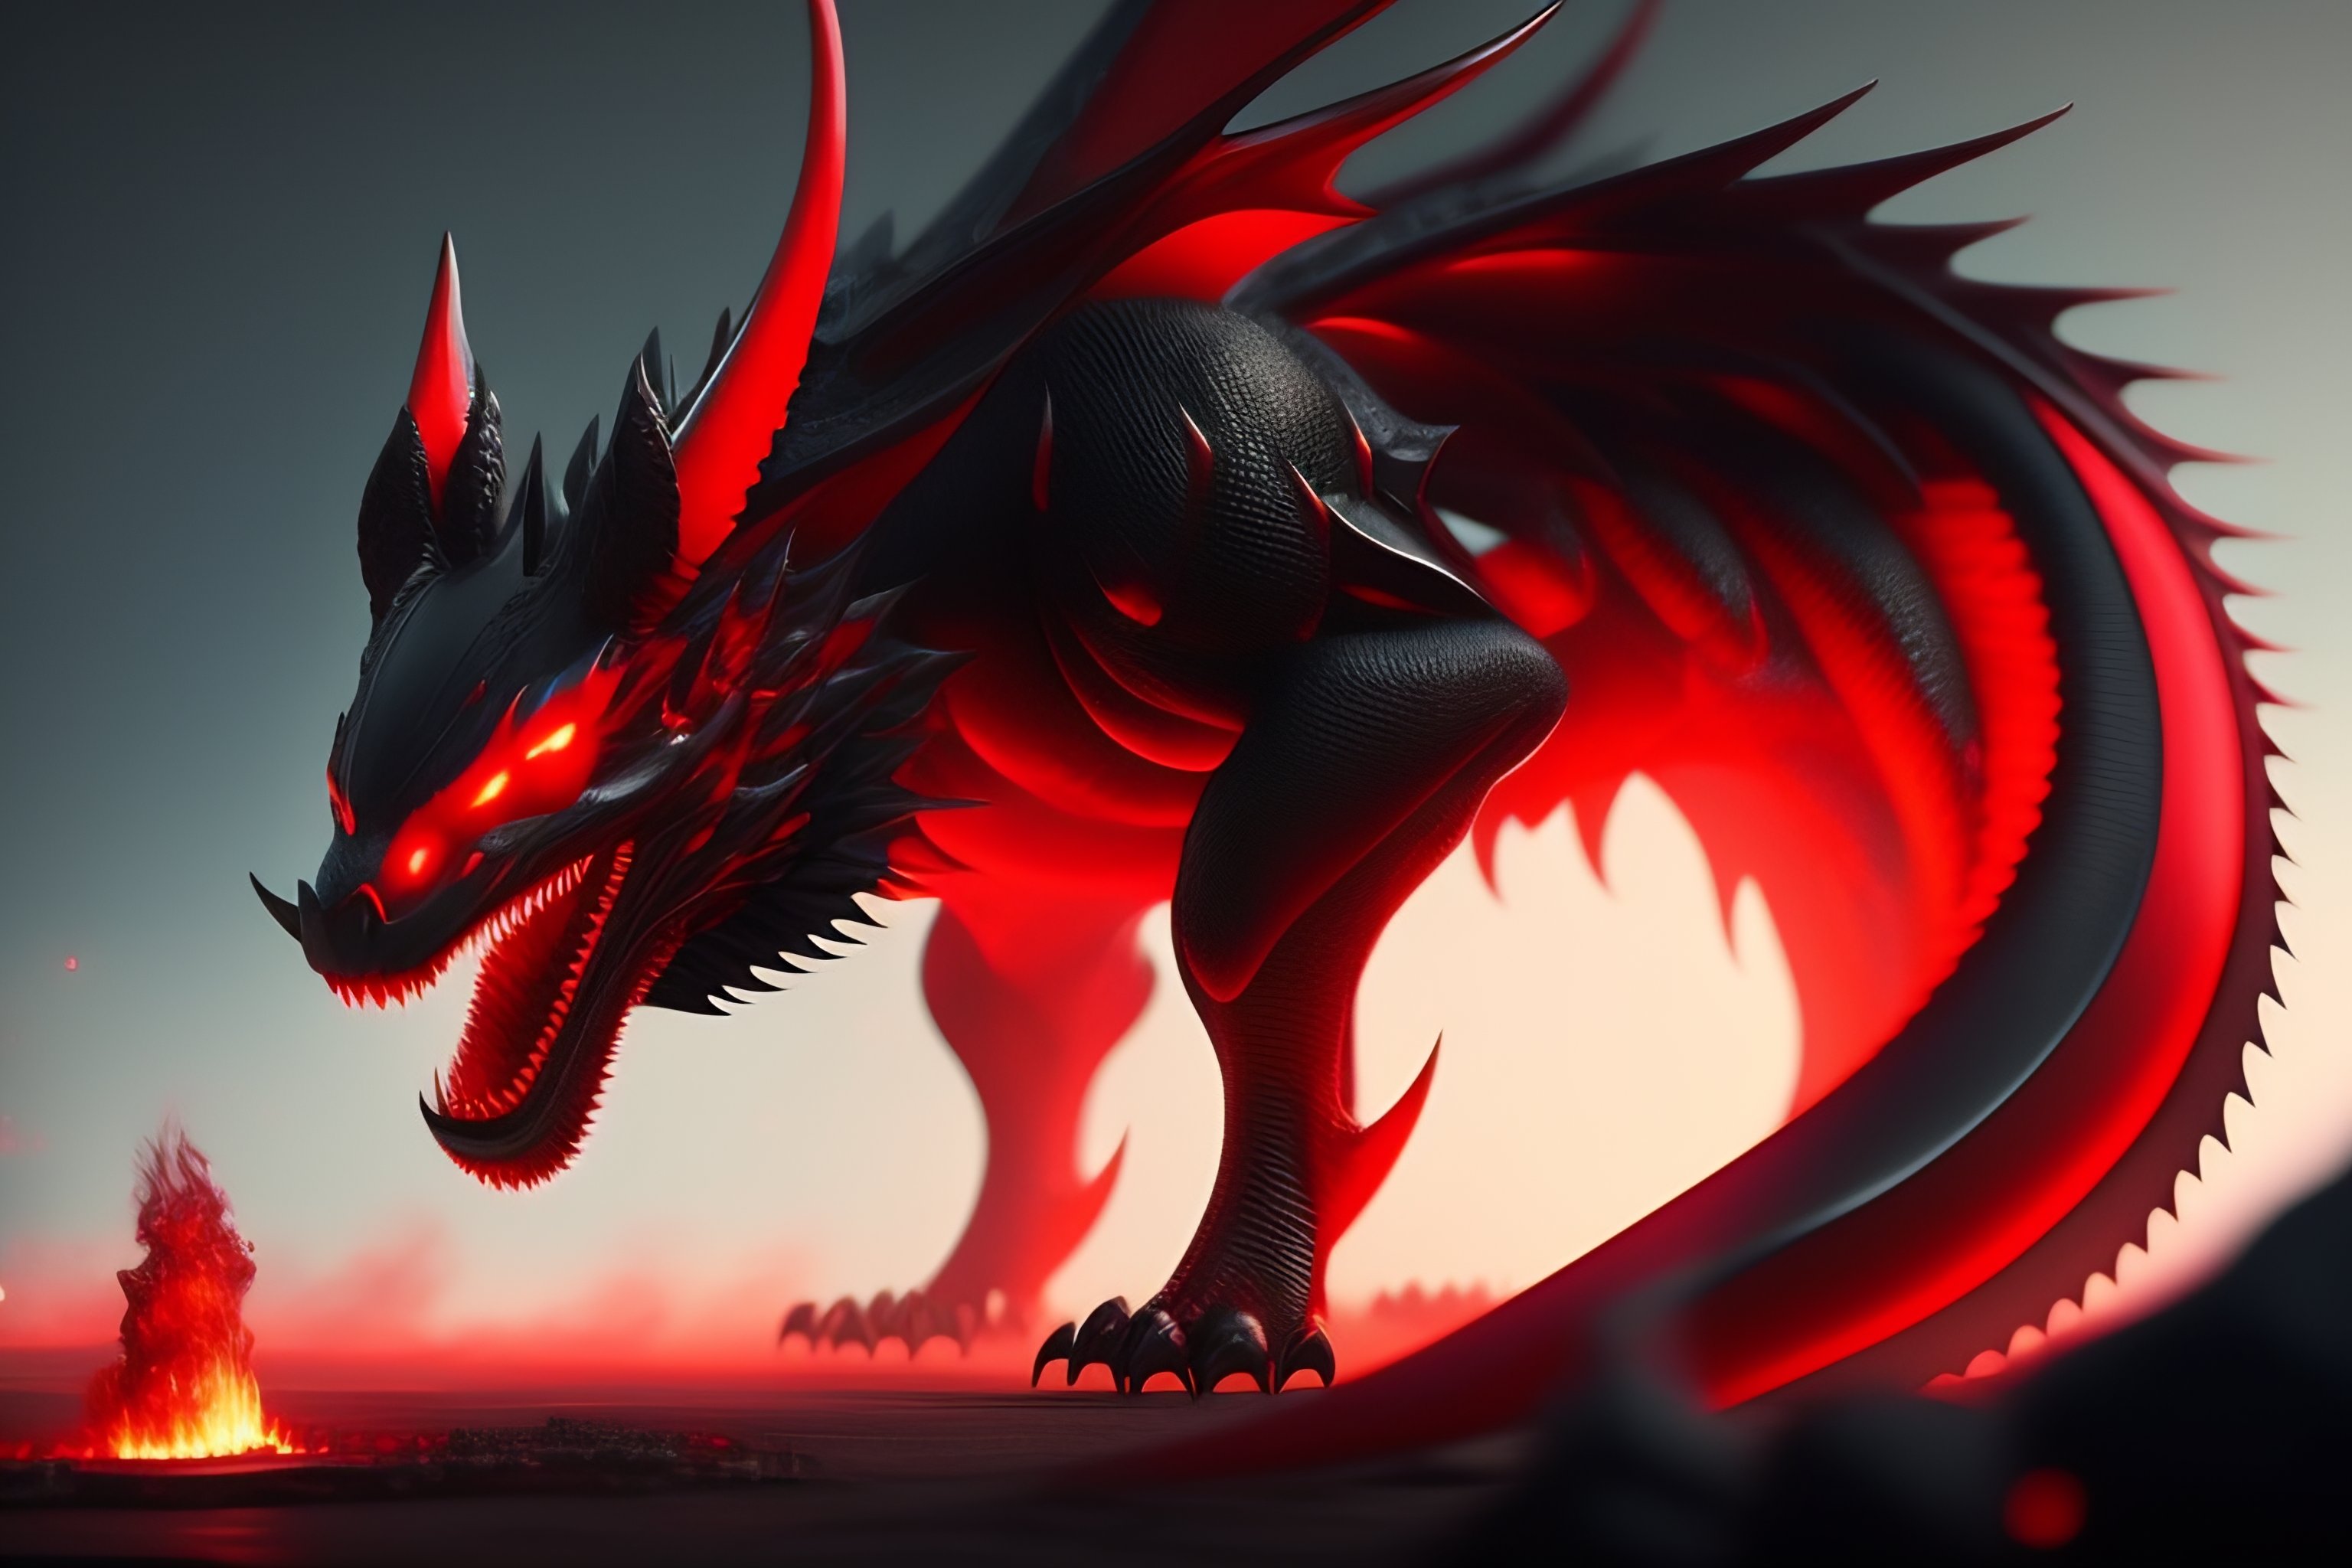 black welsh dragon